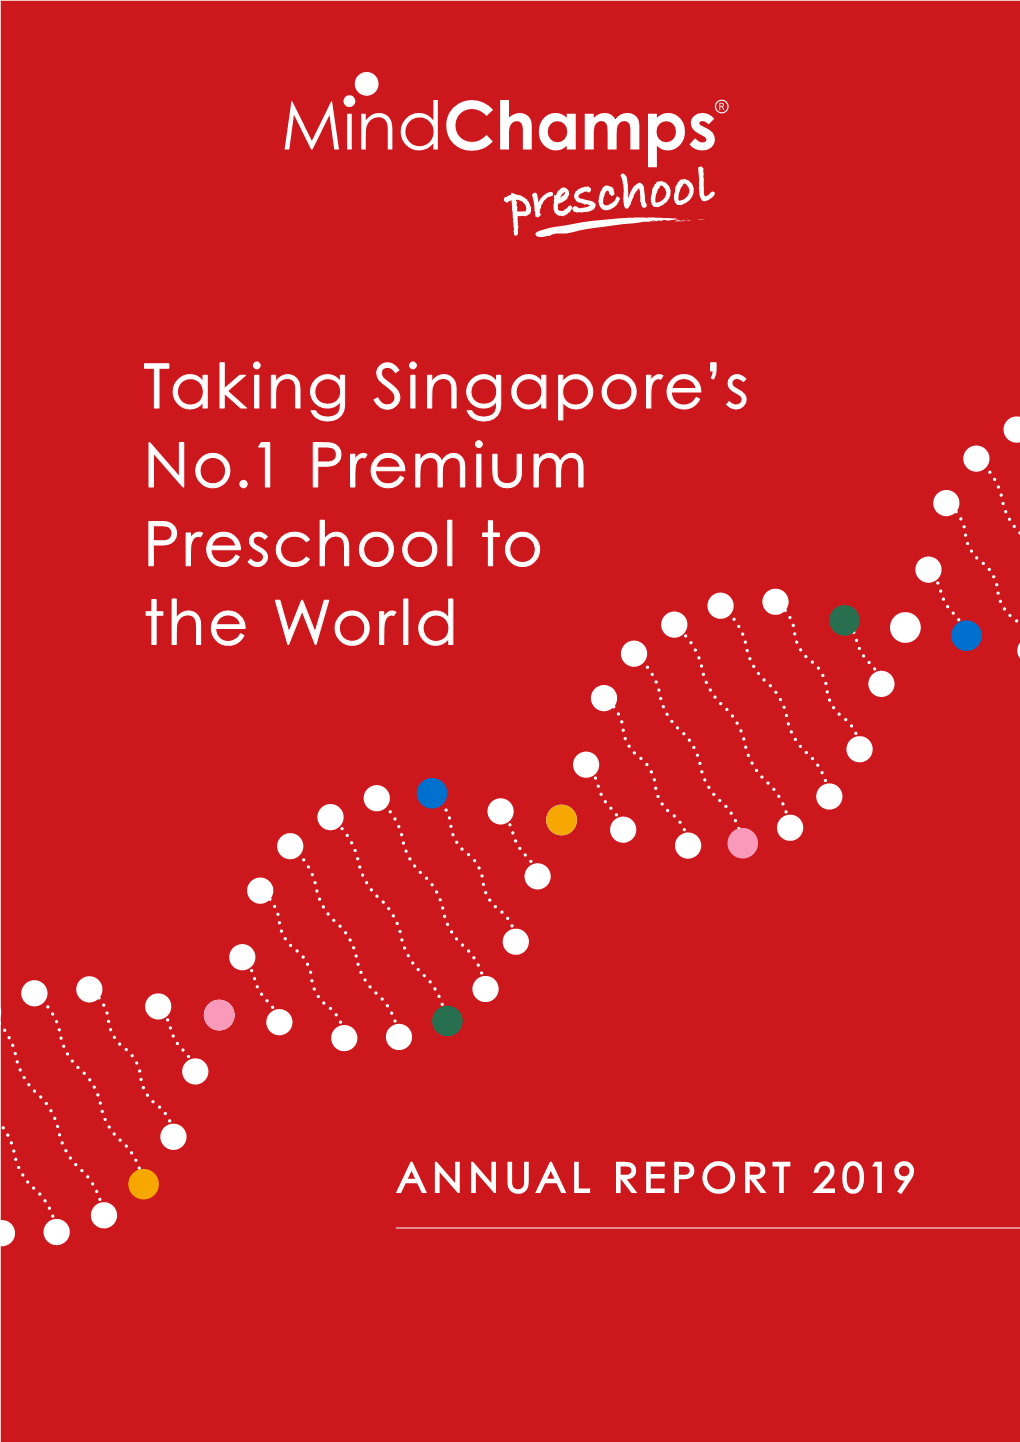 Taking Singapore's No.1 Premium Preschool to the World